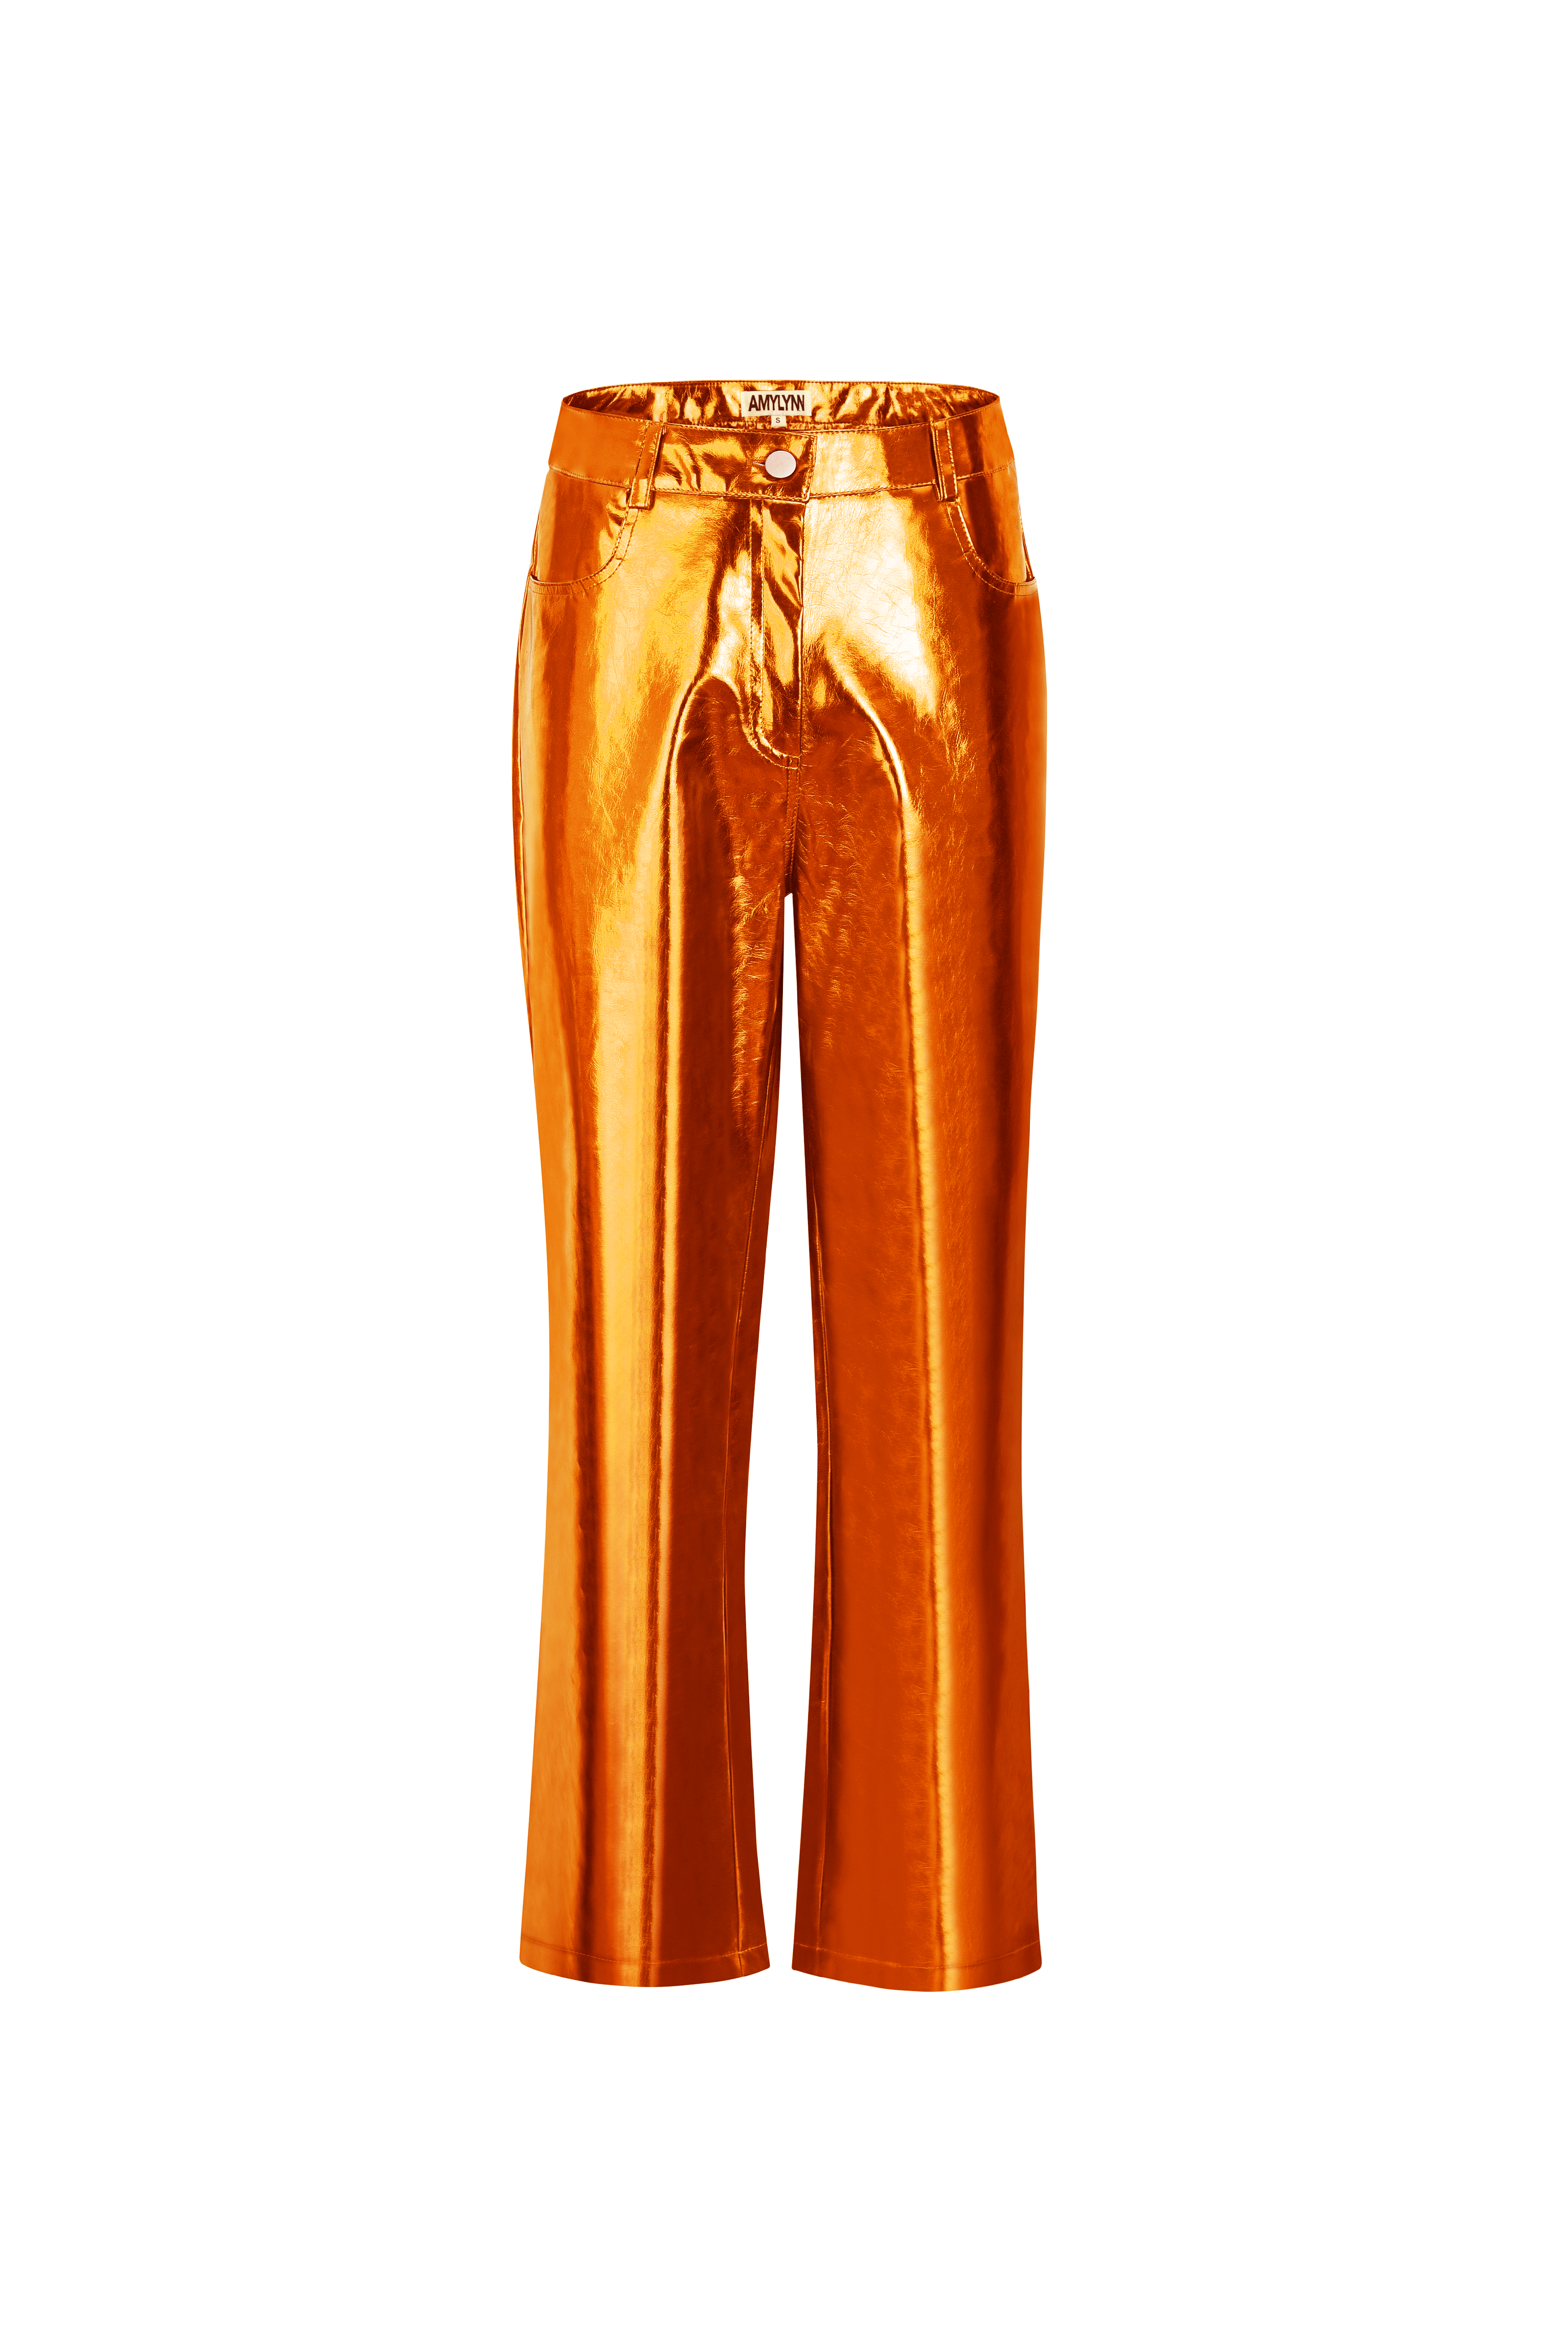 Lupe Shiny Orange Metallic PU High Waisted Straight Leg Trousers